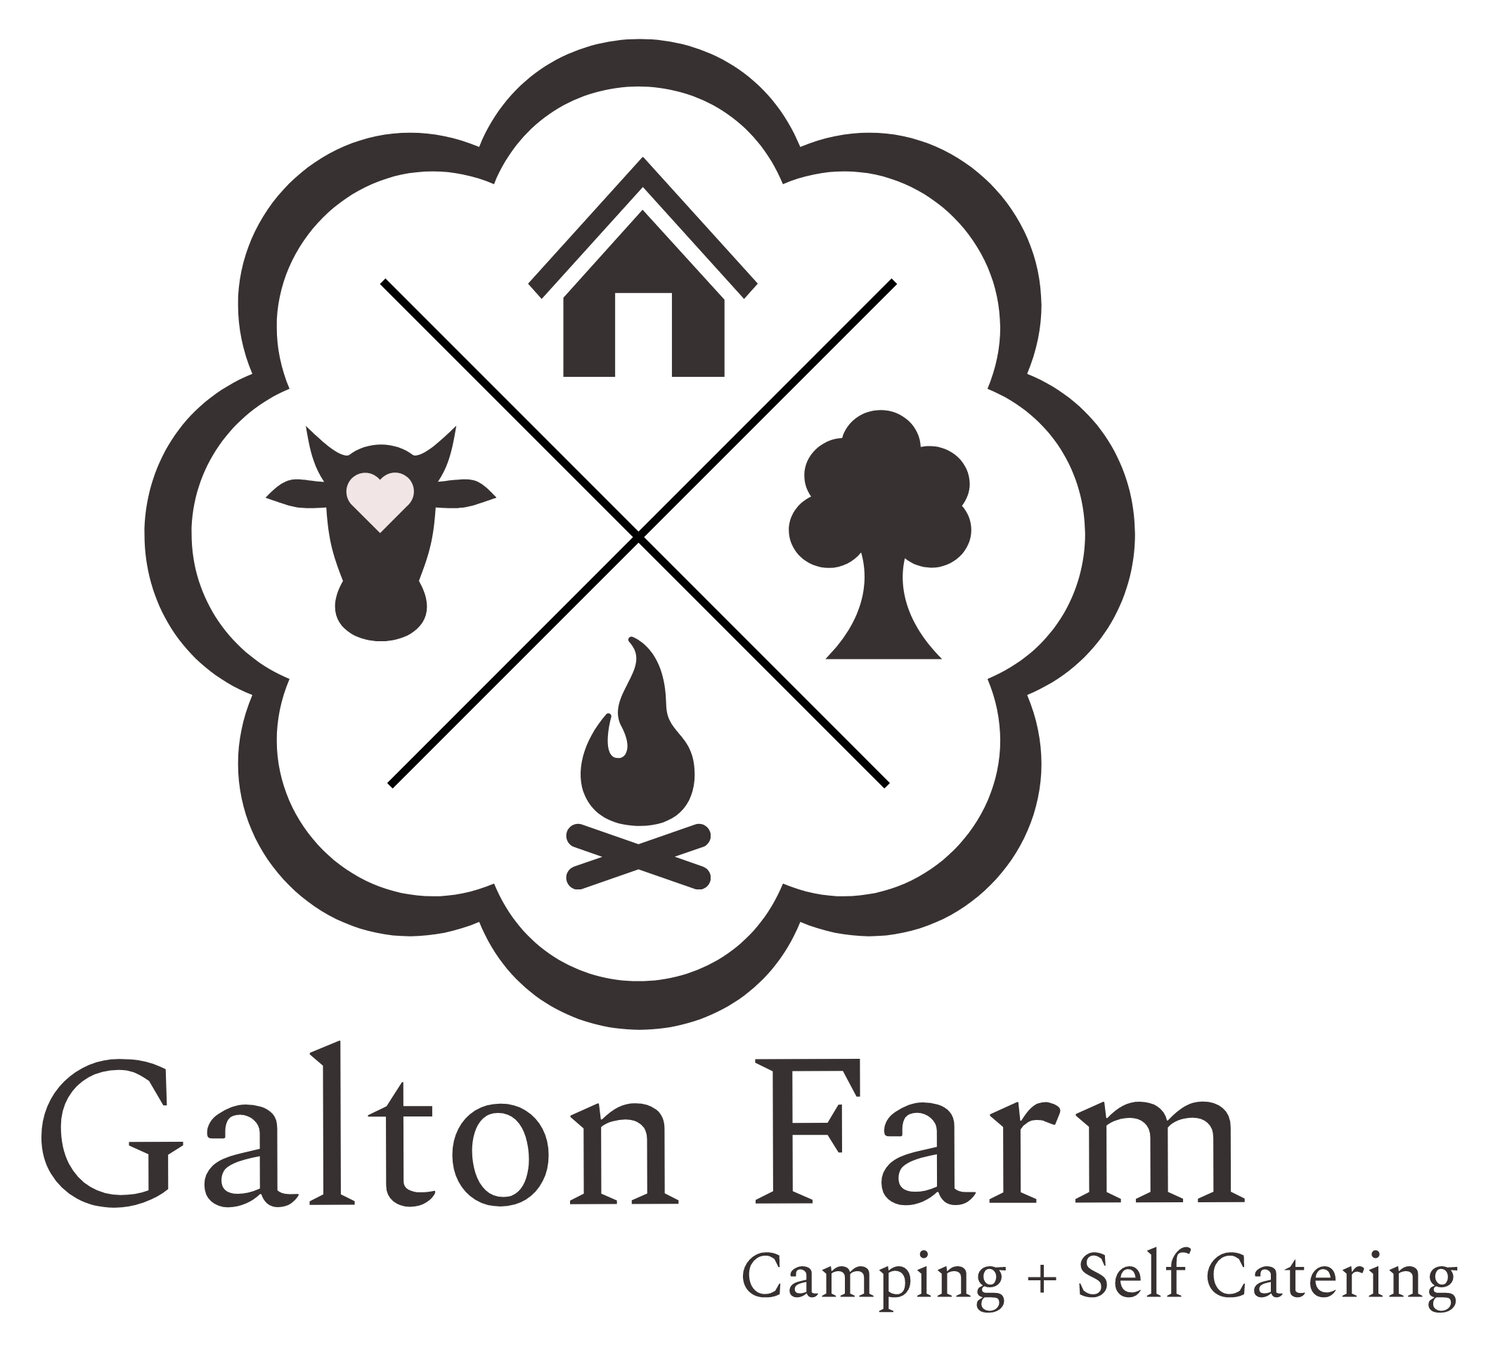 Galton Farm Campsite and Self Catering Accomodation in Dorset